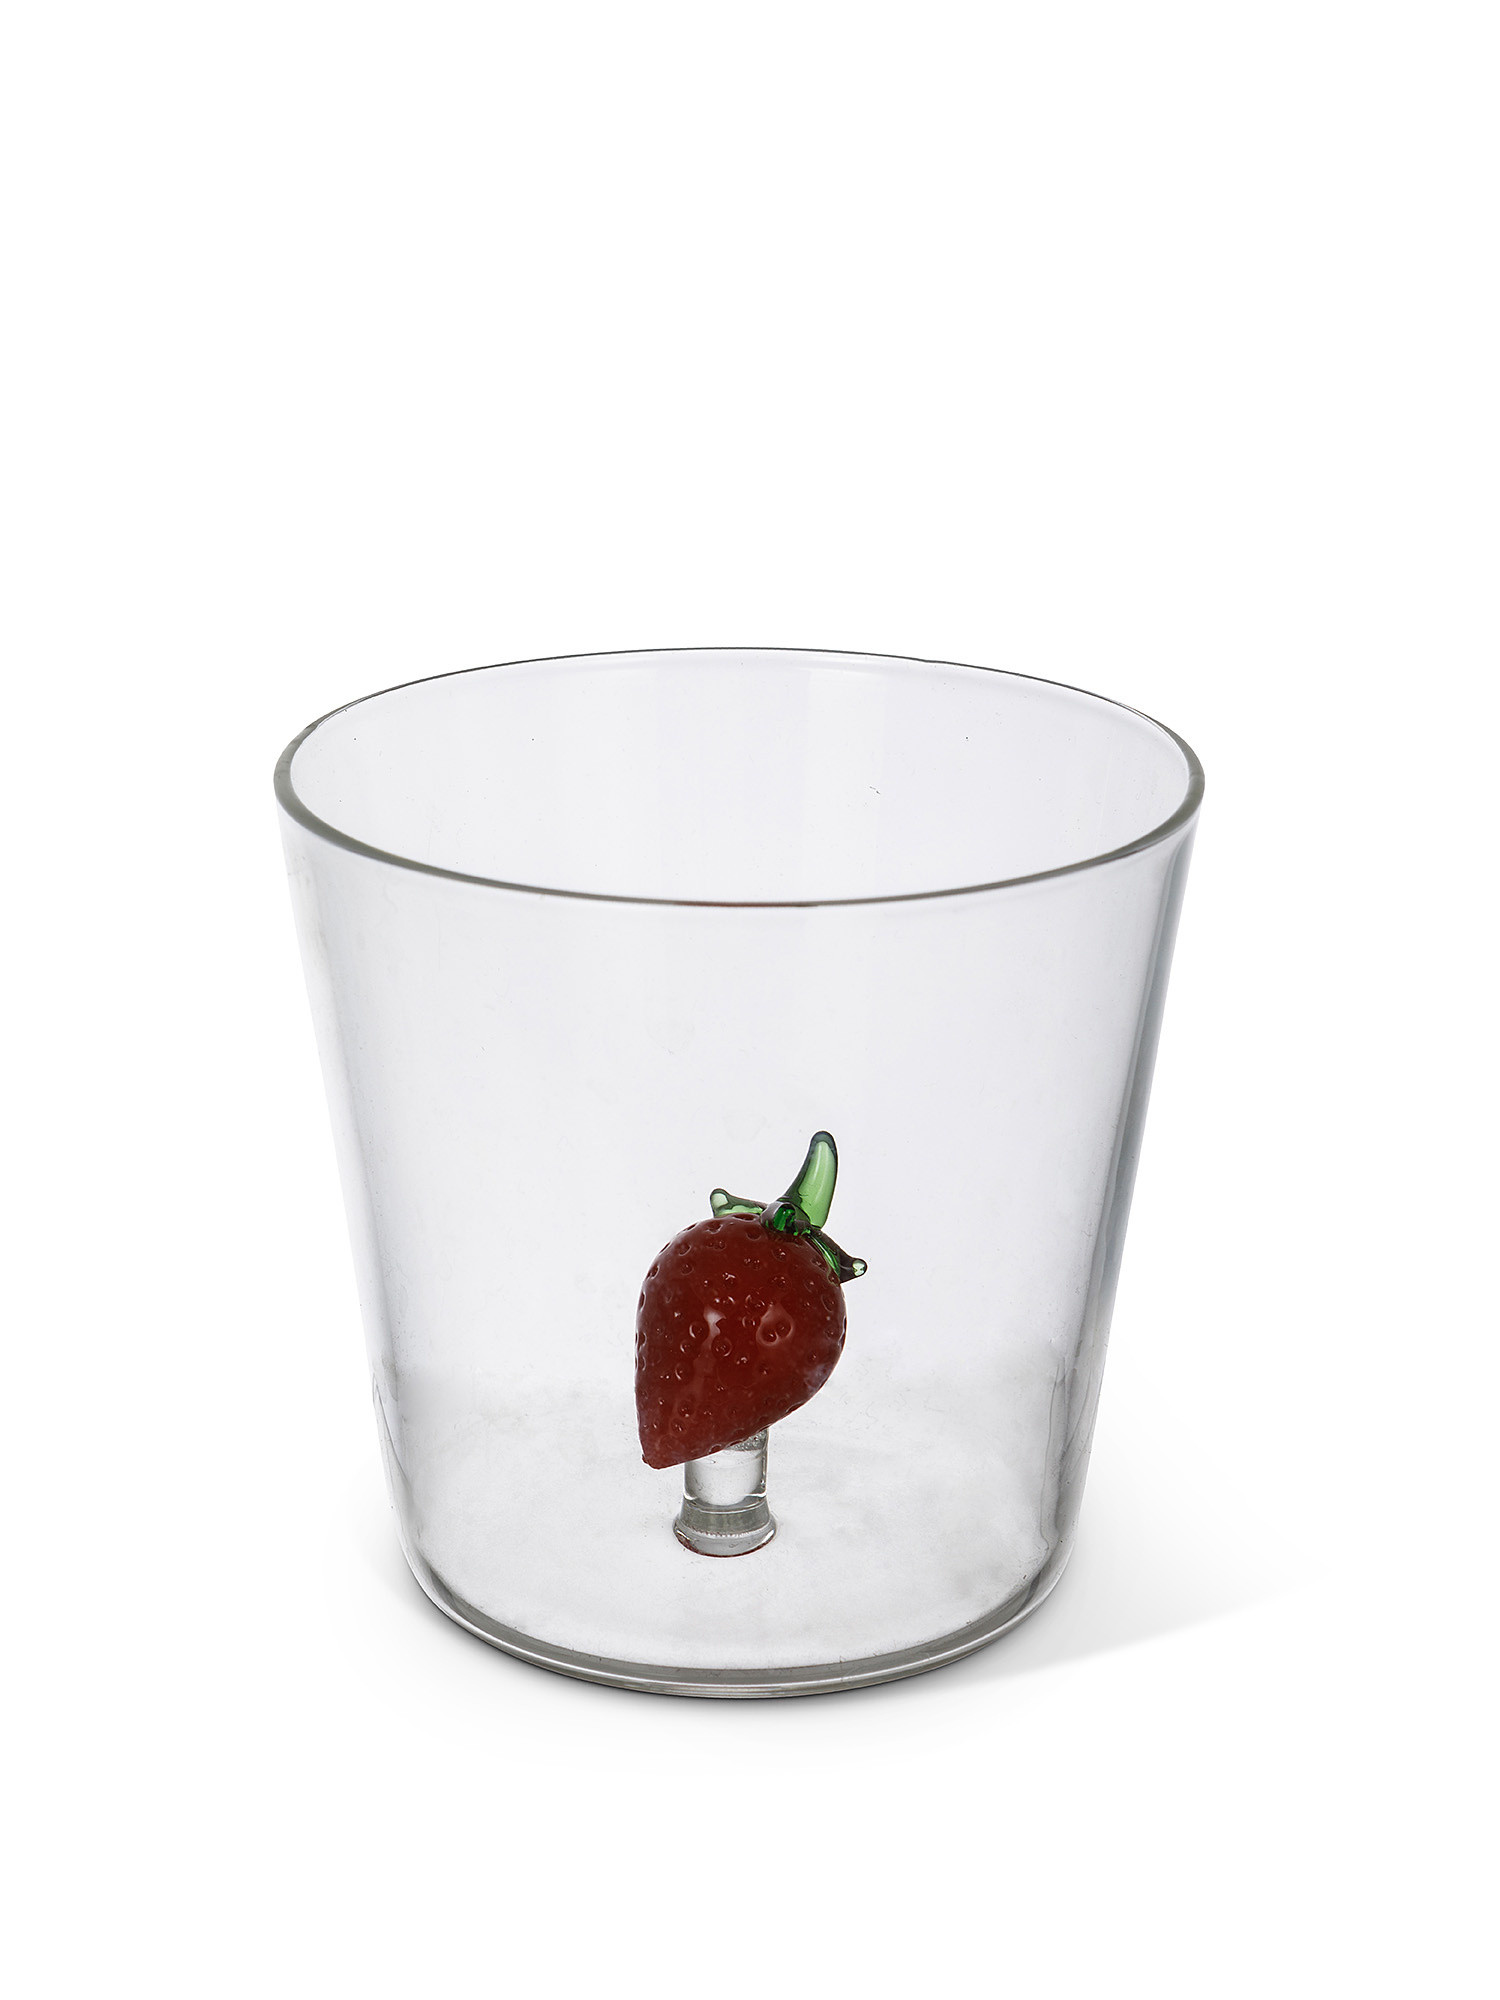 Bicchiere vetro borosilicato dettaglio fragola, Trasparente, large image number 1